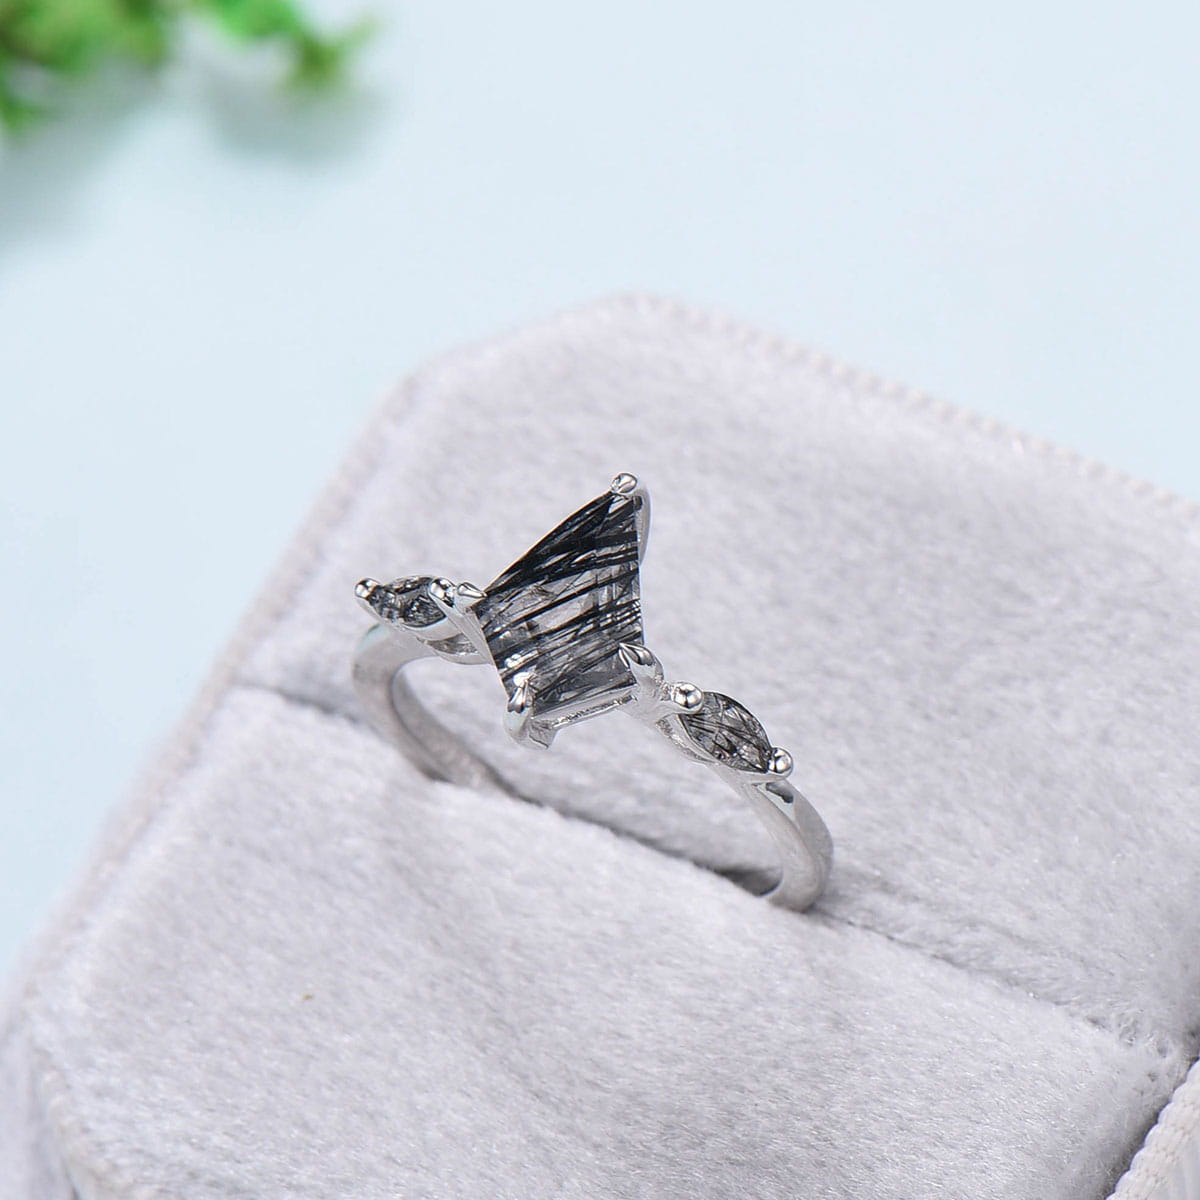 Kite cut black rutilated quartz ring minimalist marquise cut black tourmaline 3 stone engagement ring Dainty wedding ring anniversary gift - PENFINE